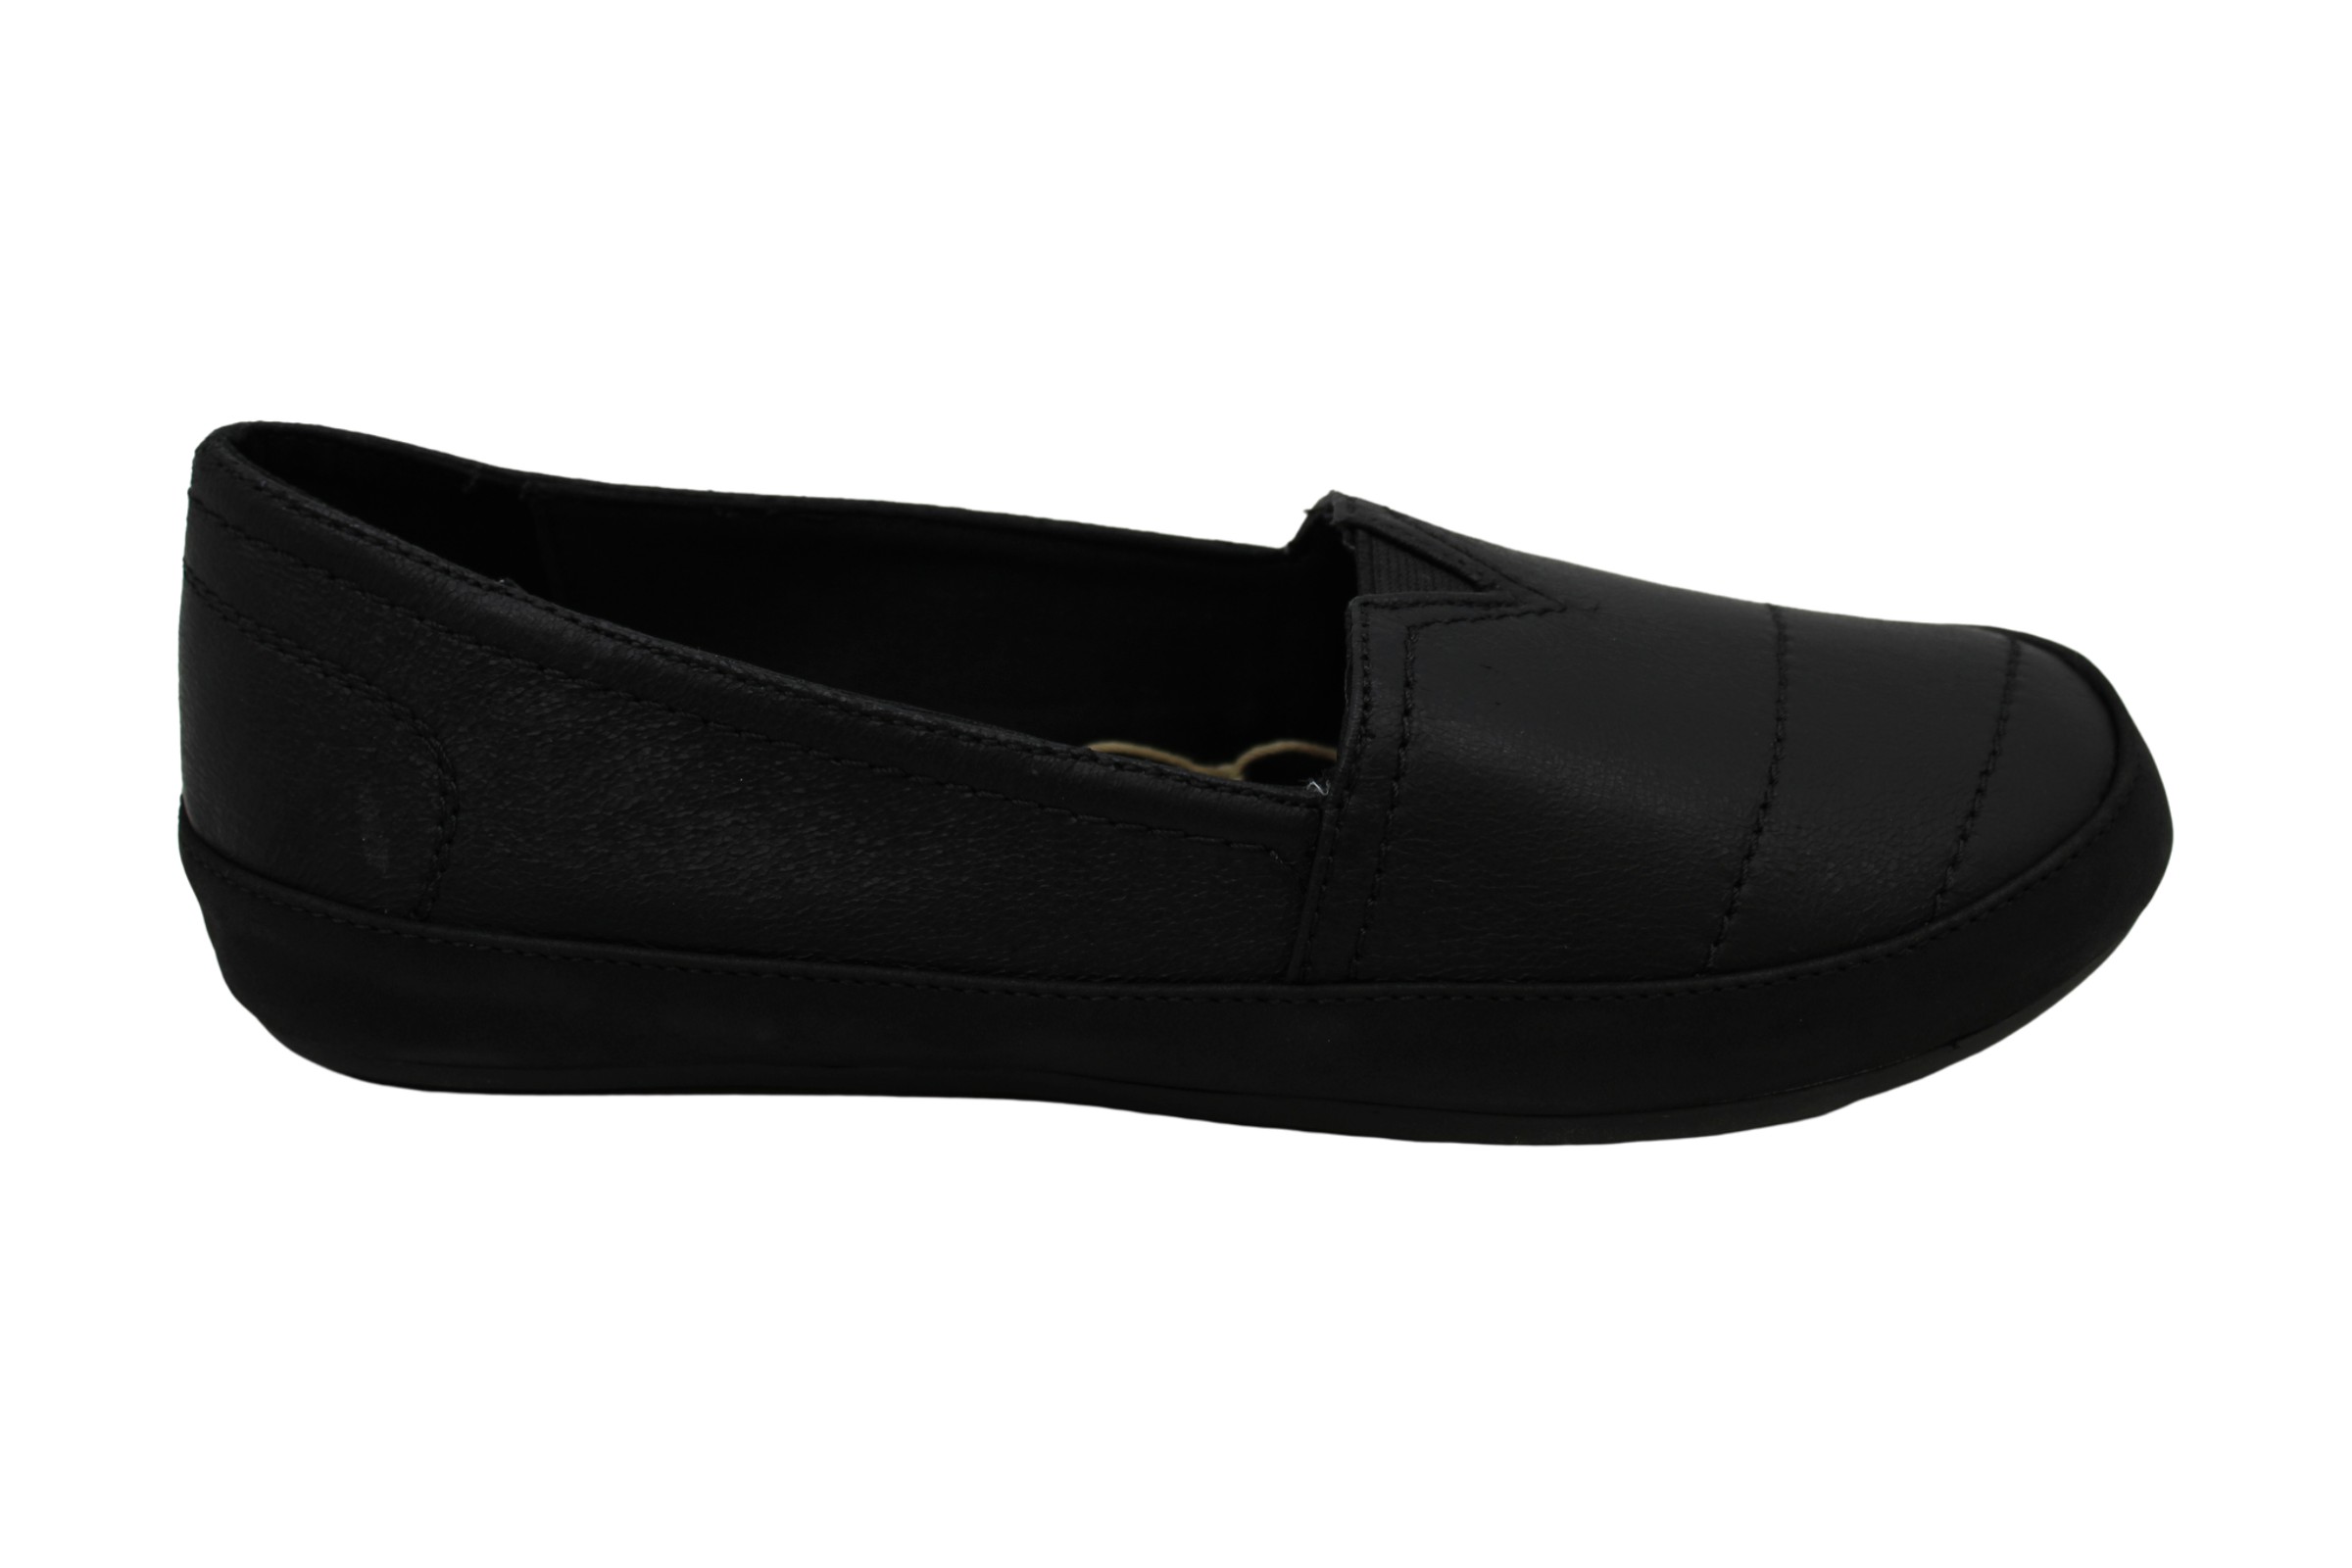 Mia Womens Loafers & SlipOns in Black Color, Size 7 GXV | eBay